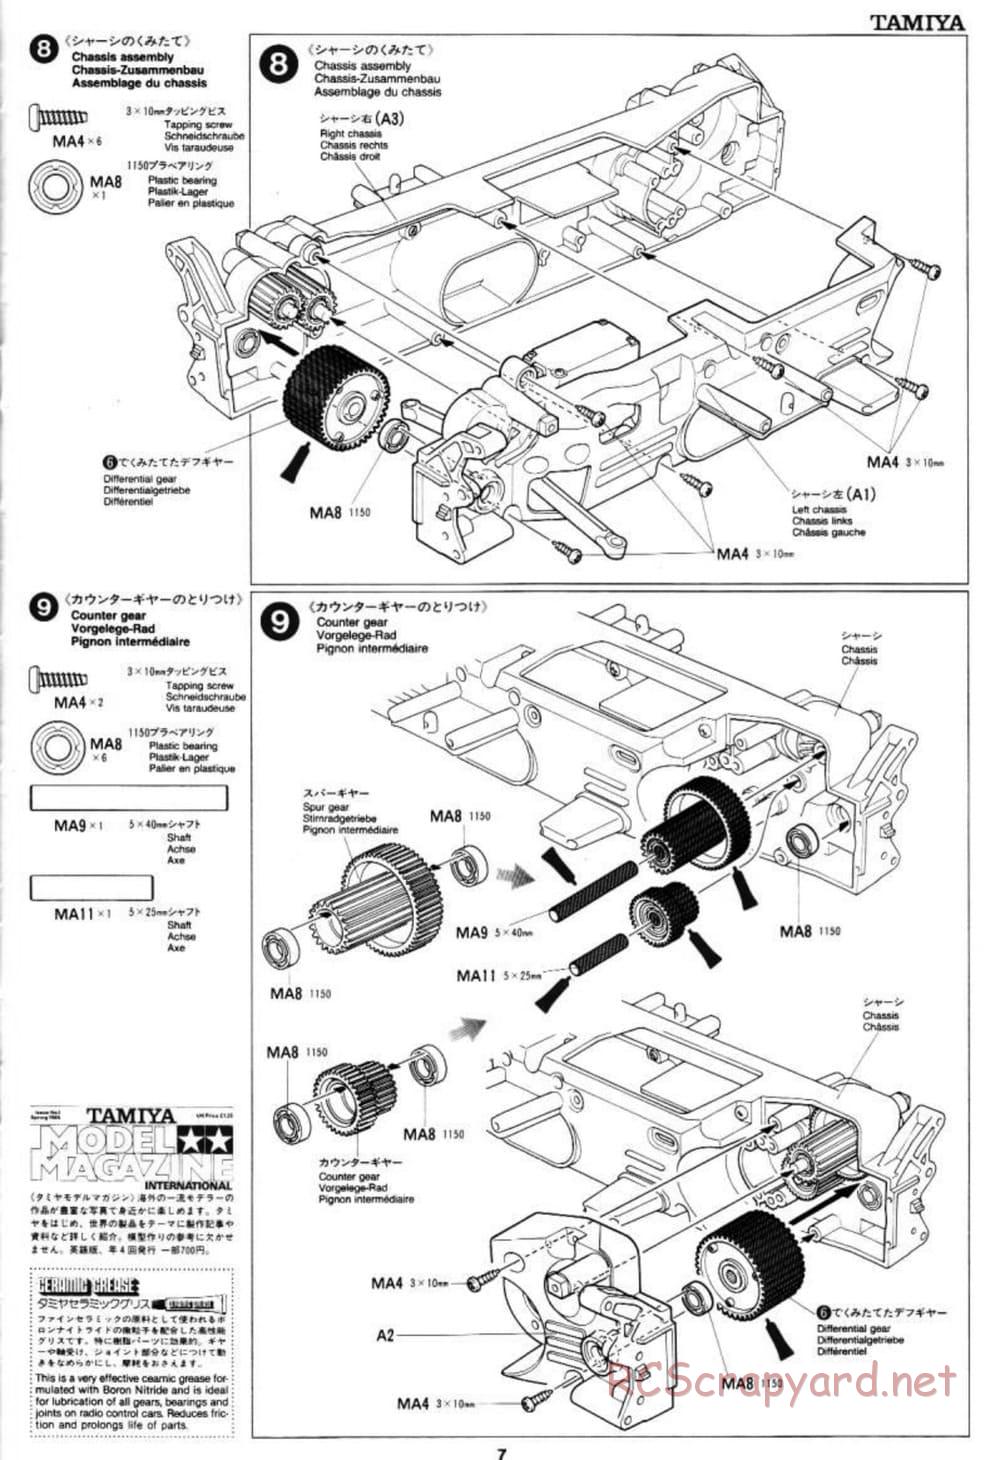 Tamiya - Peugeot 406 ST - TL-01 Chassis - Manual - Page 7